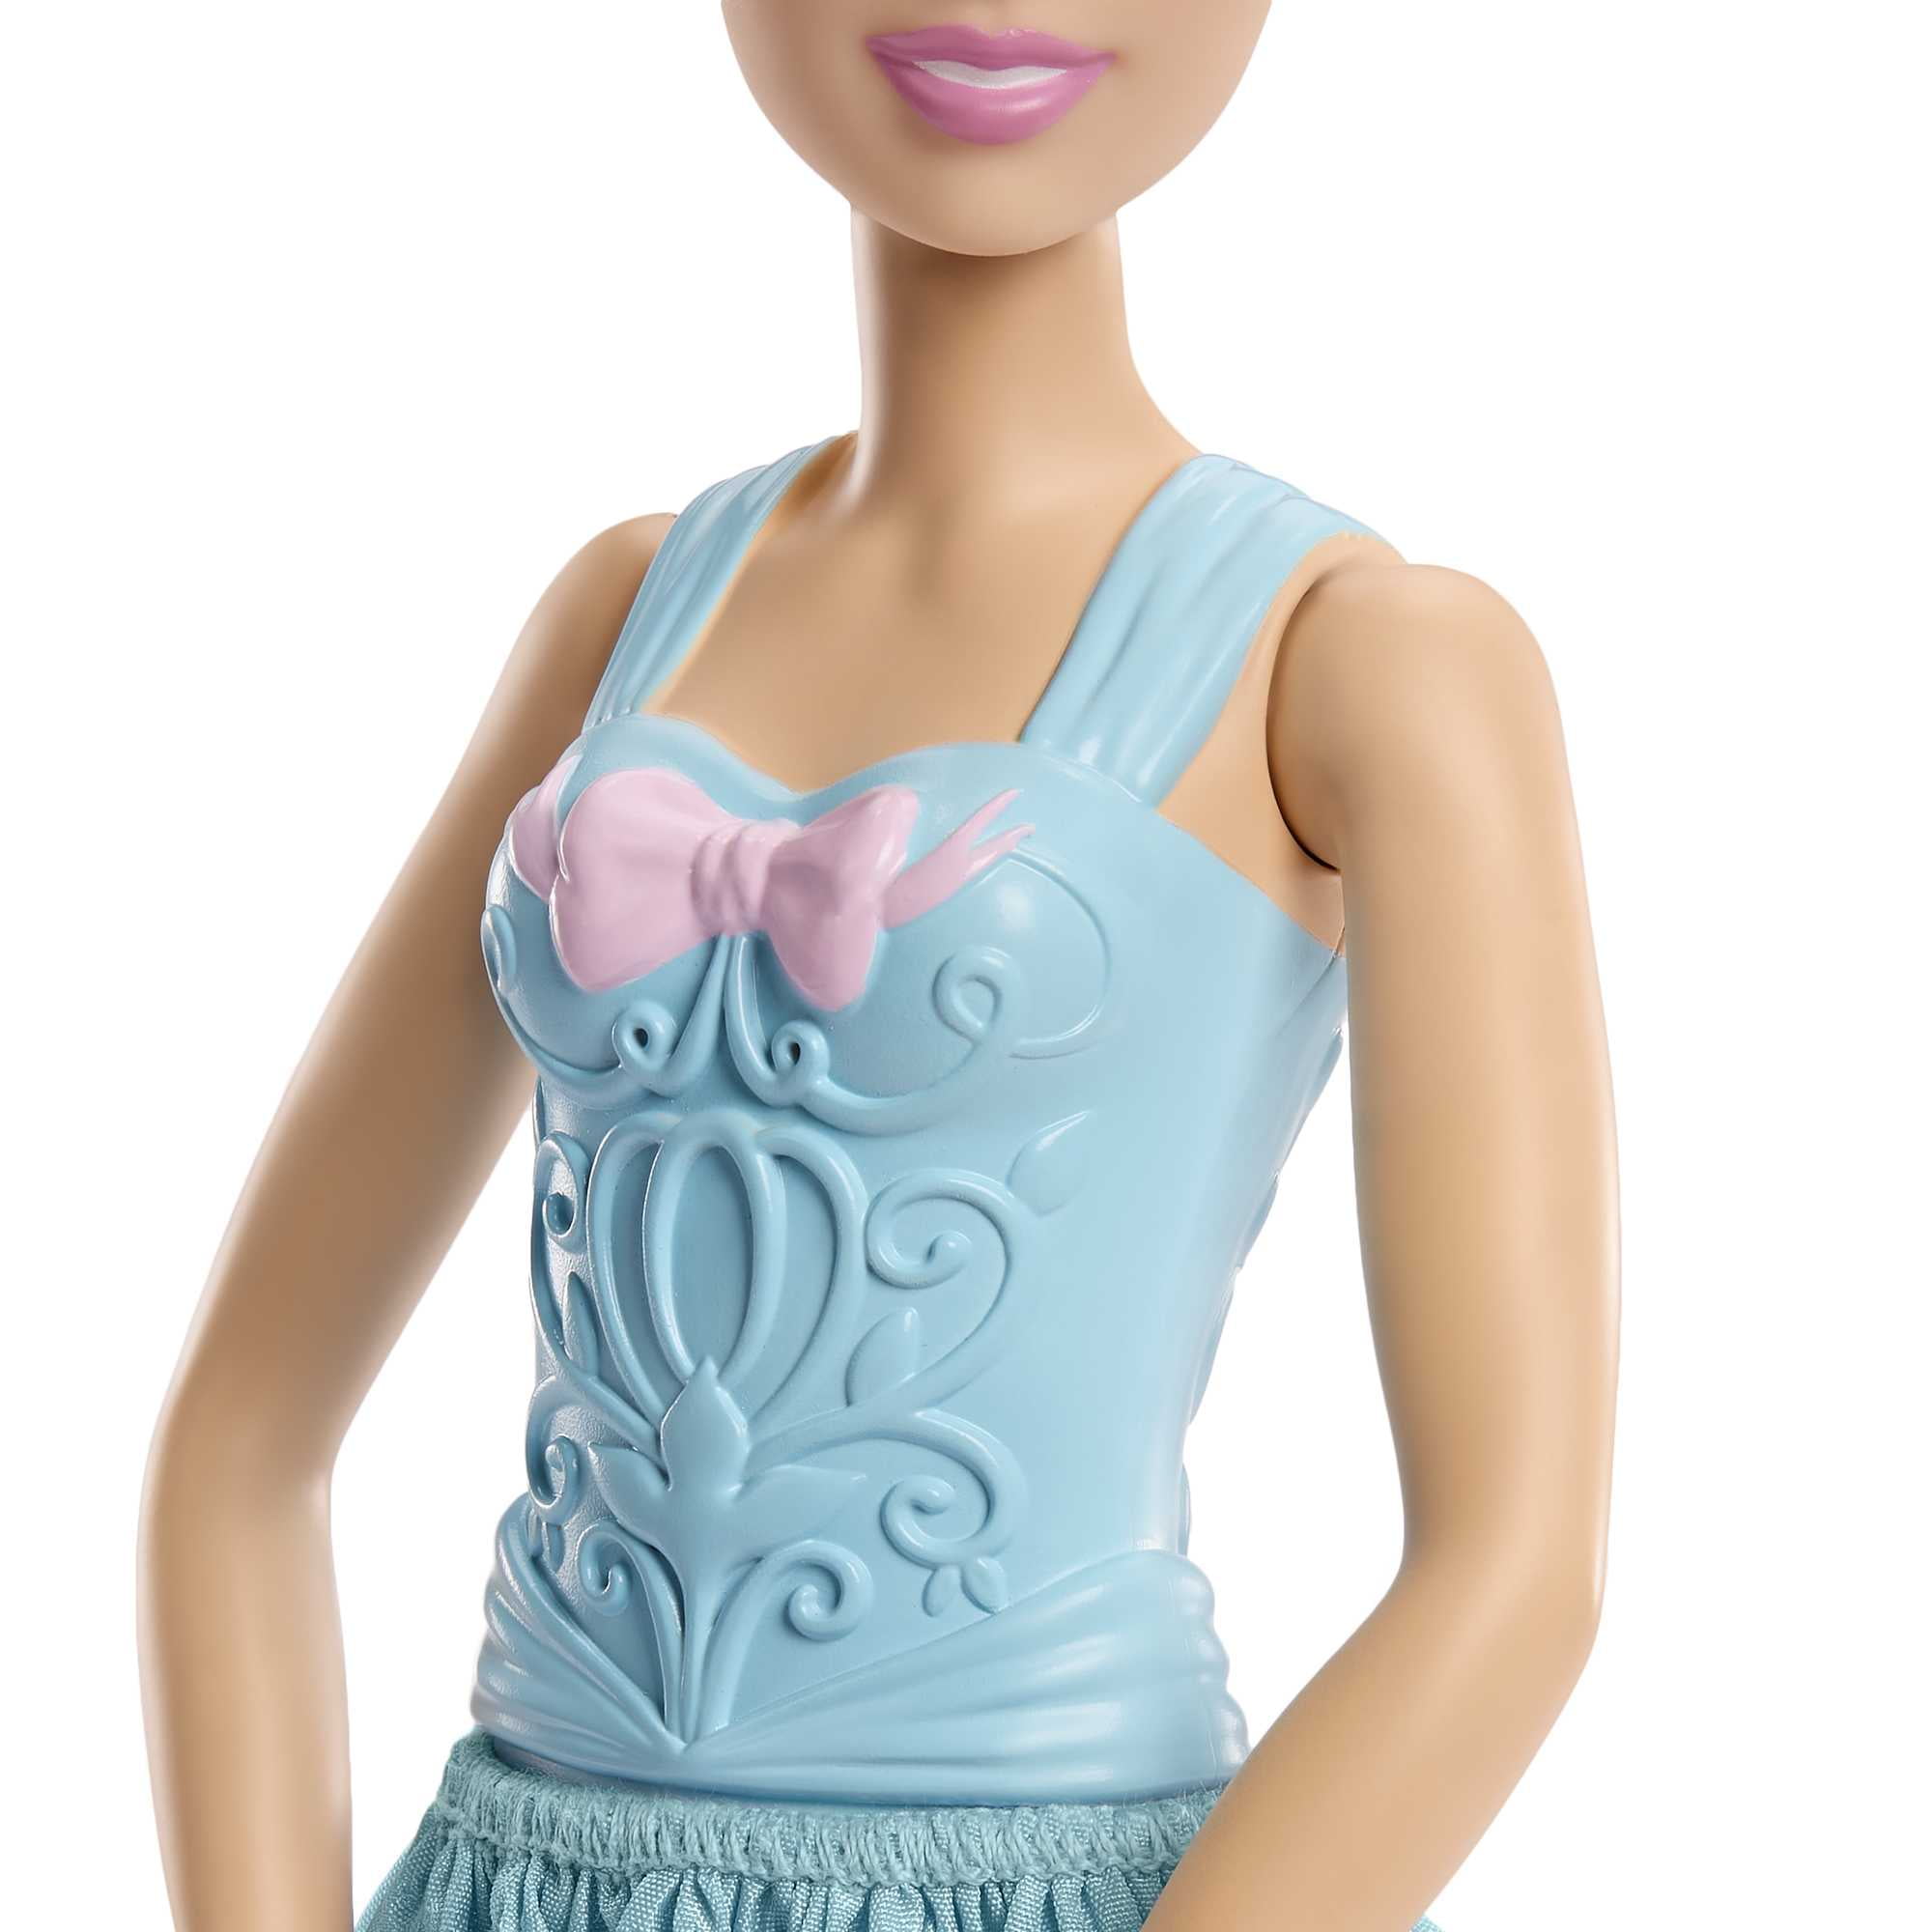 Disney Princess Ballerina Cinderella Fashion Doll with Posable